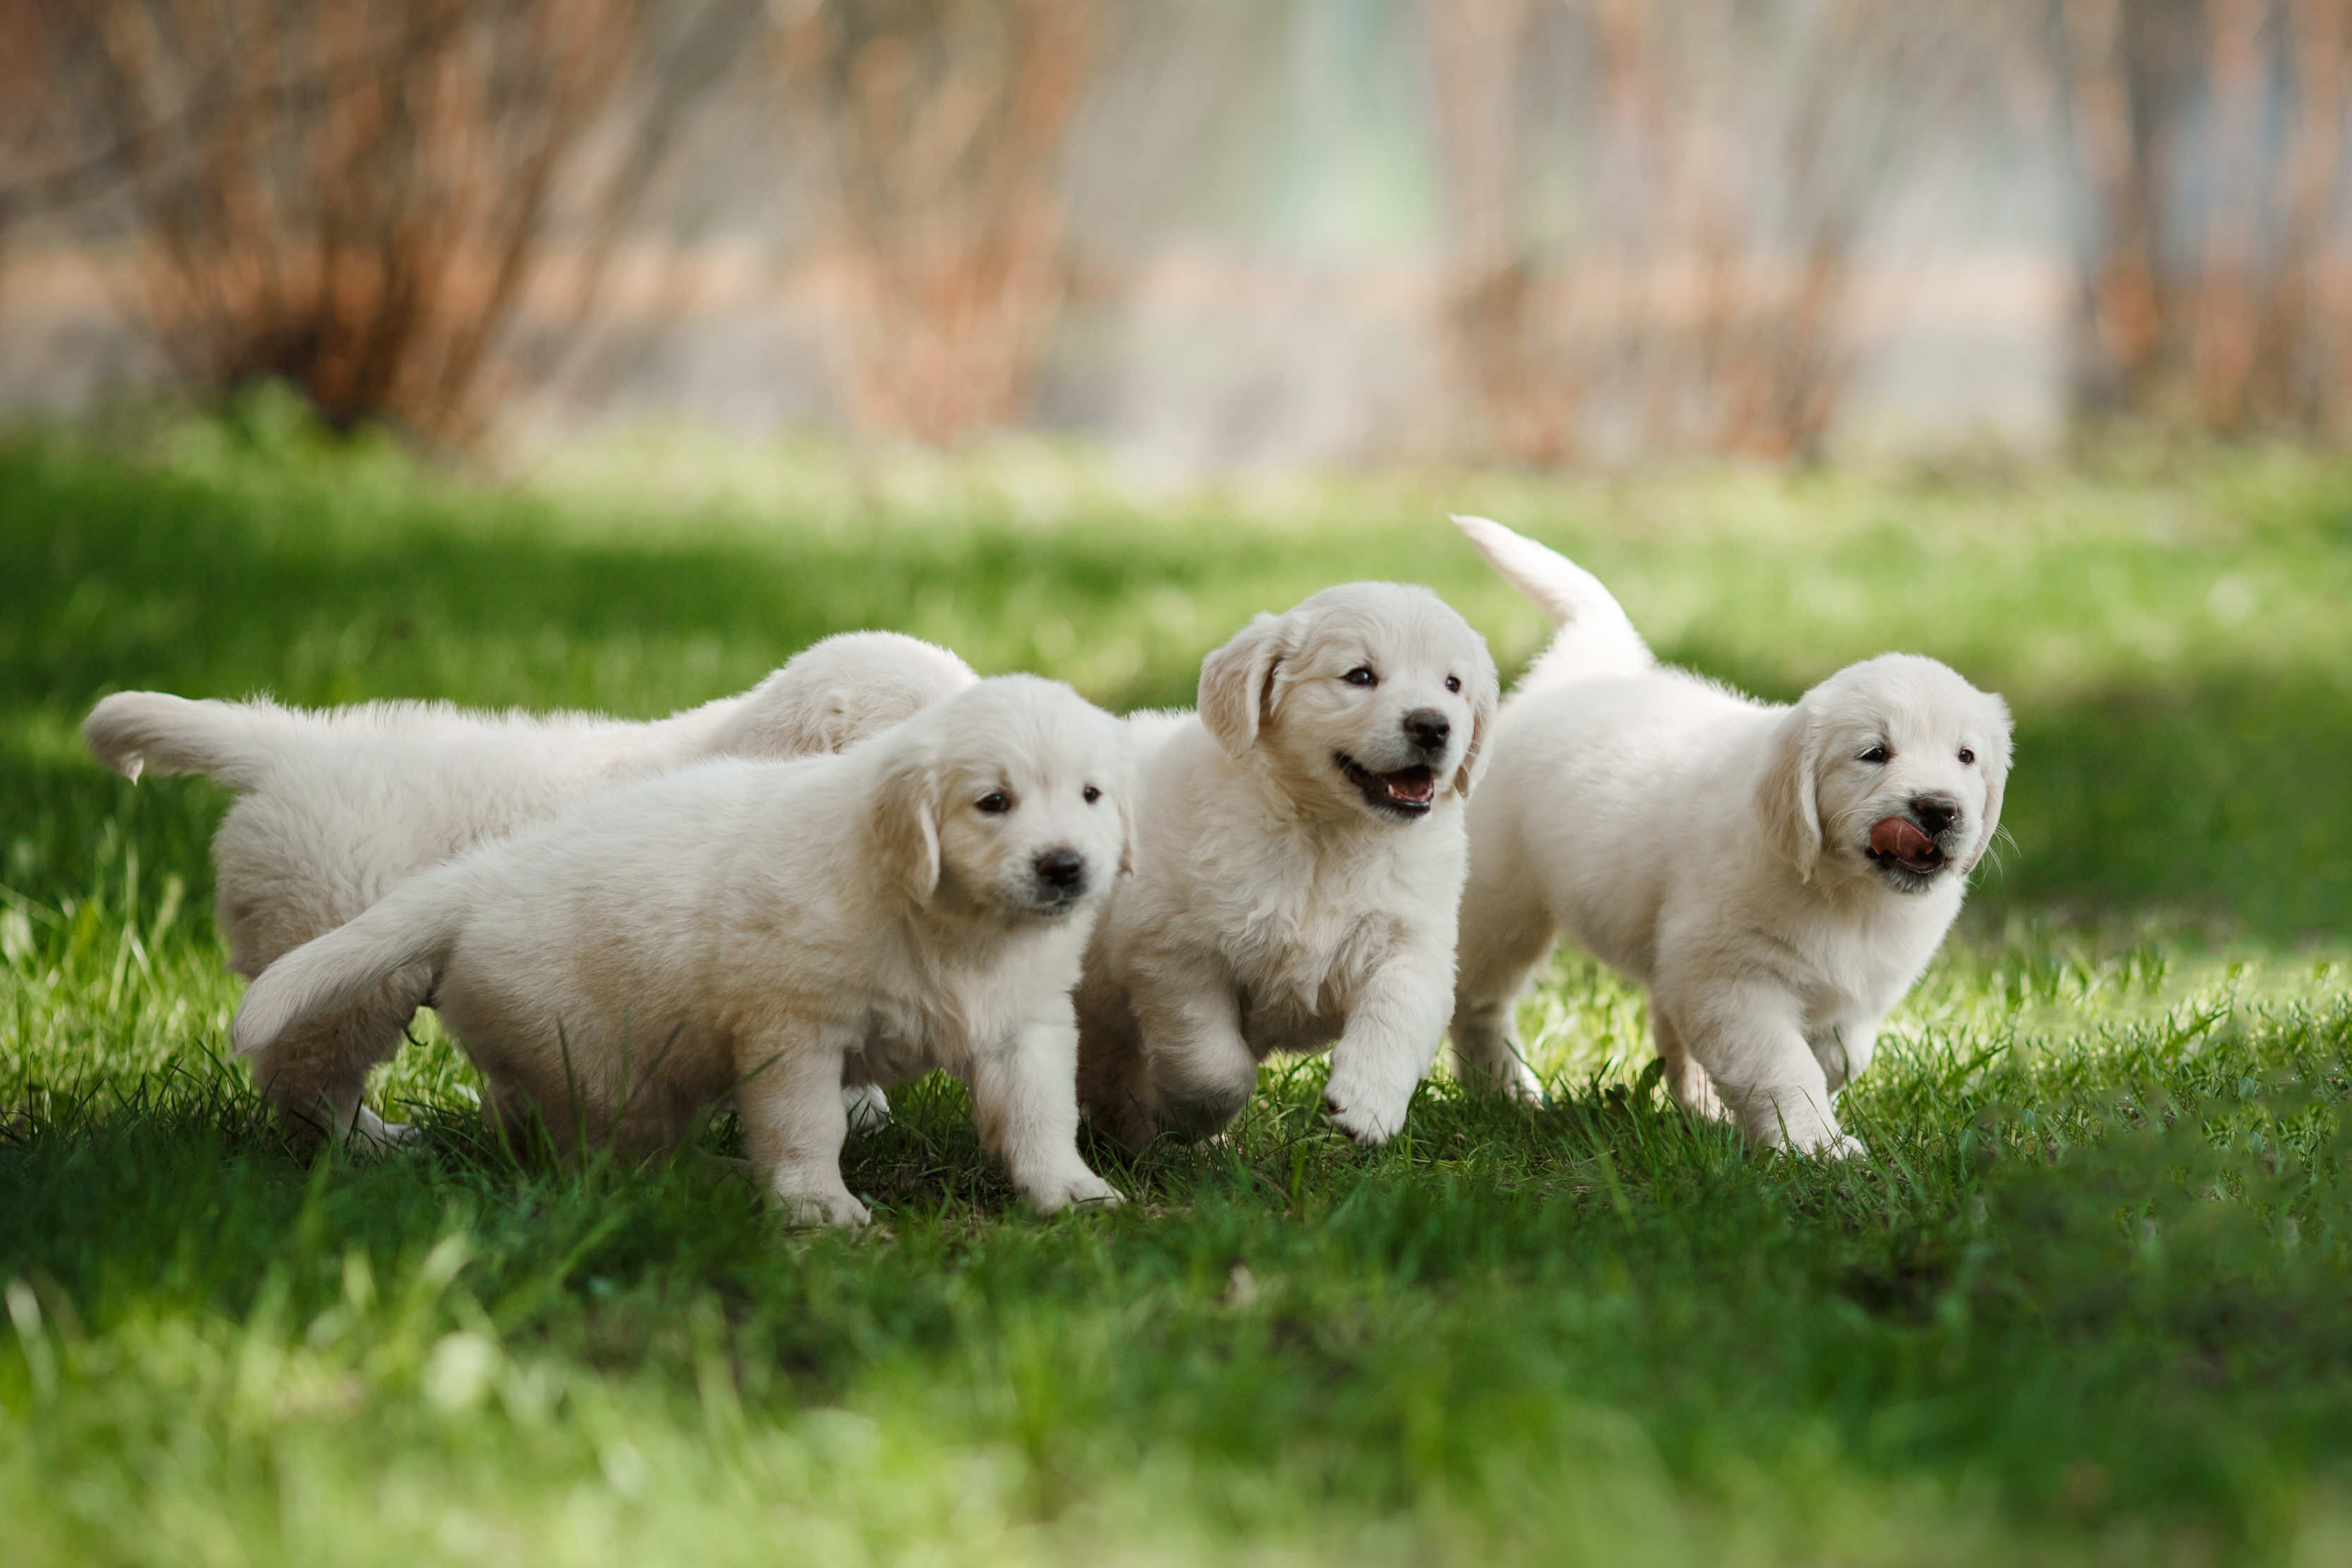 A group of fluffy little golden retriever puppies running towards the camera